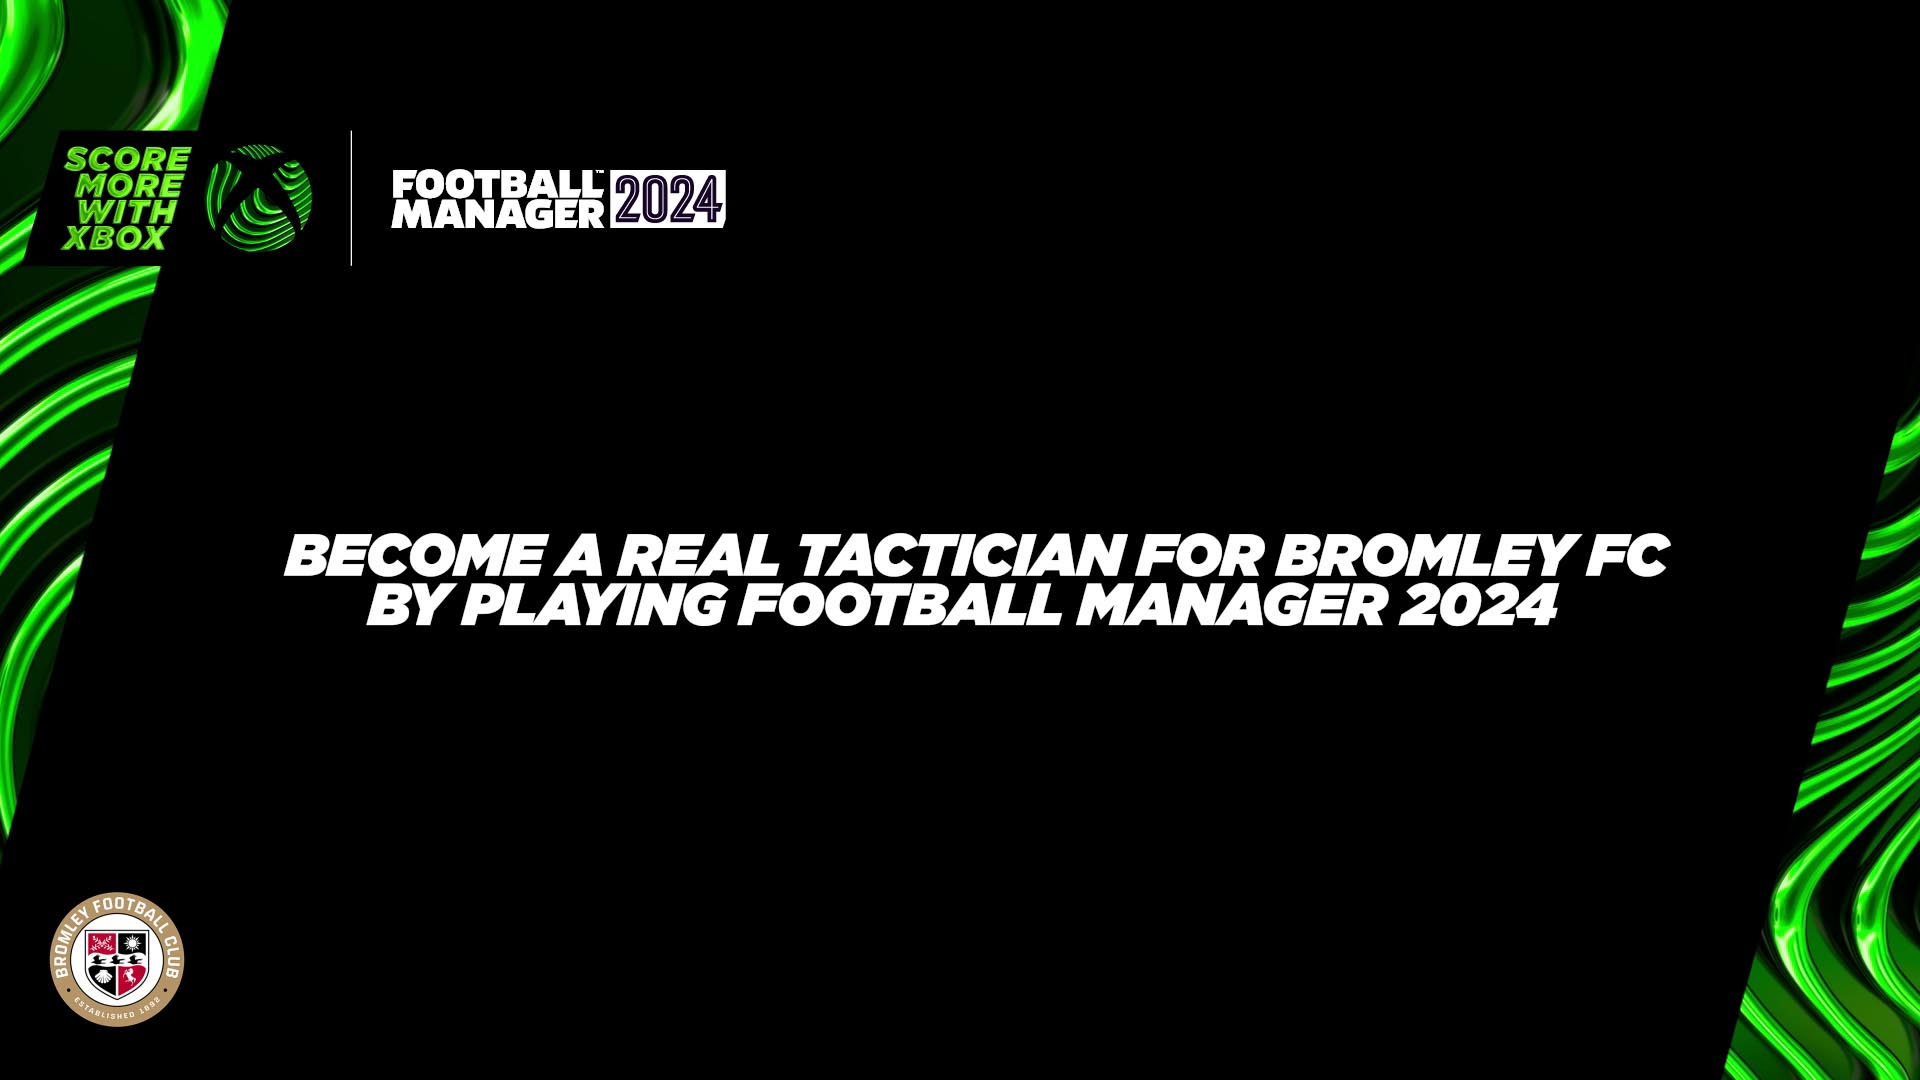 X-Box Football Manager 23 - Comprar Football Manager 2023 para